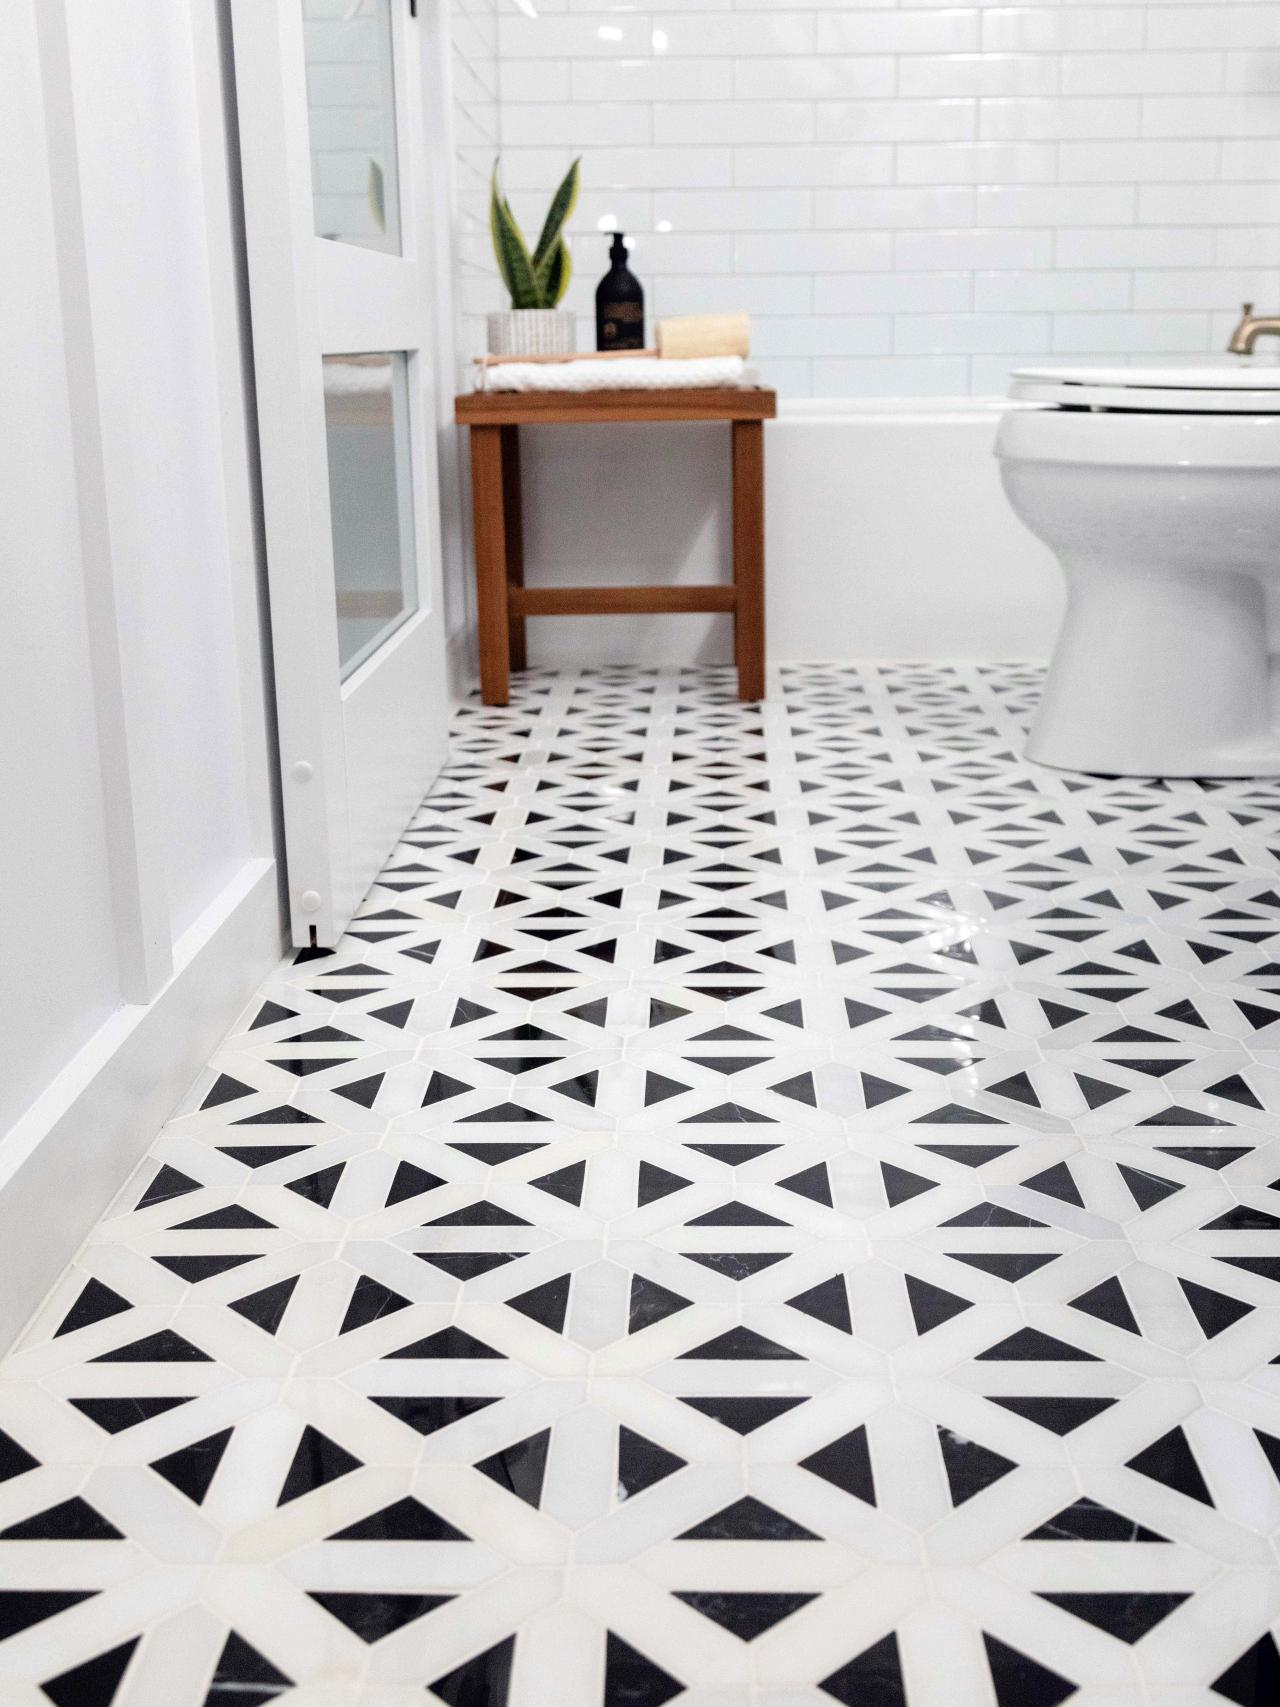 How to Lay a Tile Floor | HGTV